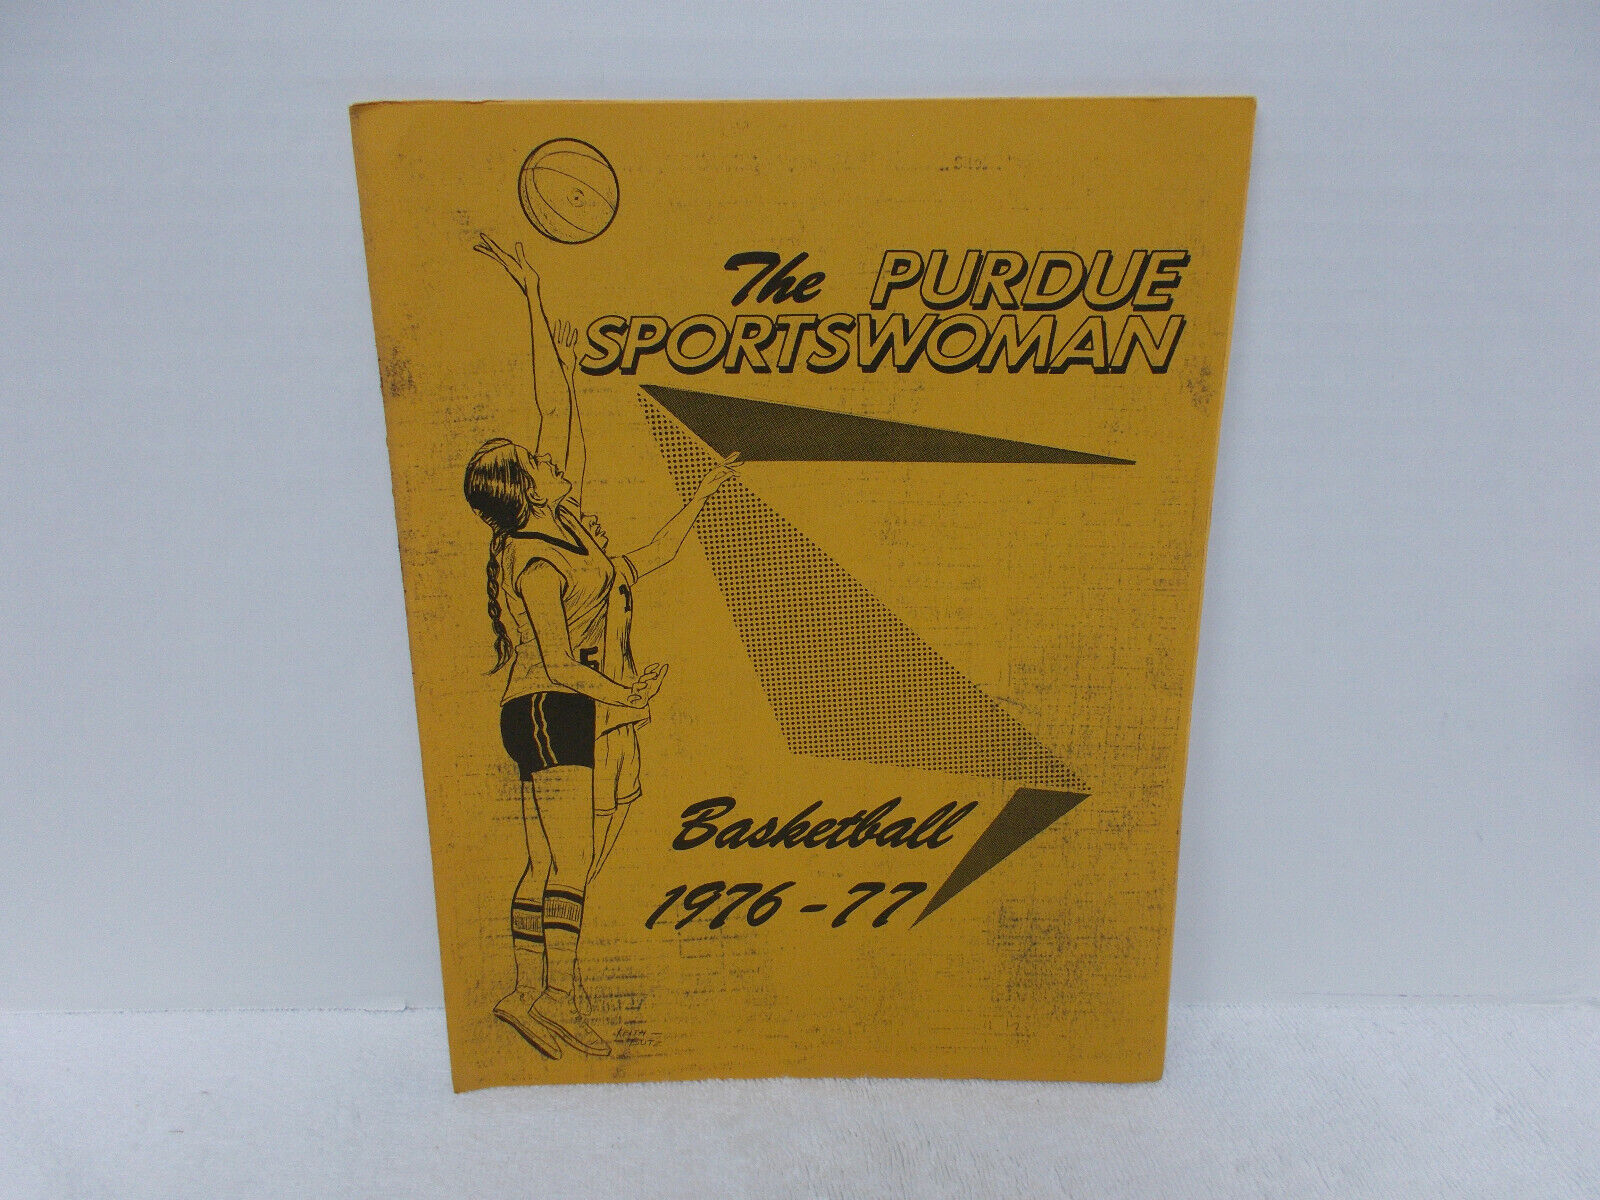 THE PURDUE SPORTSWOMAN BASKETBALL BOOKLET / 1976 - 77